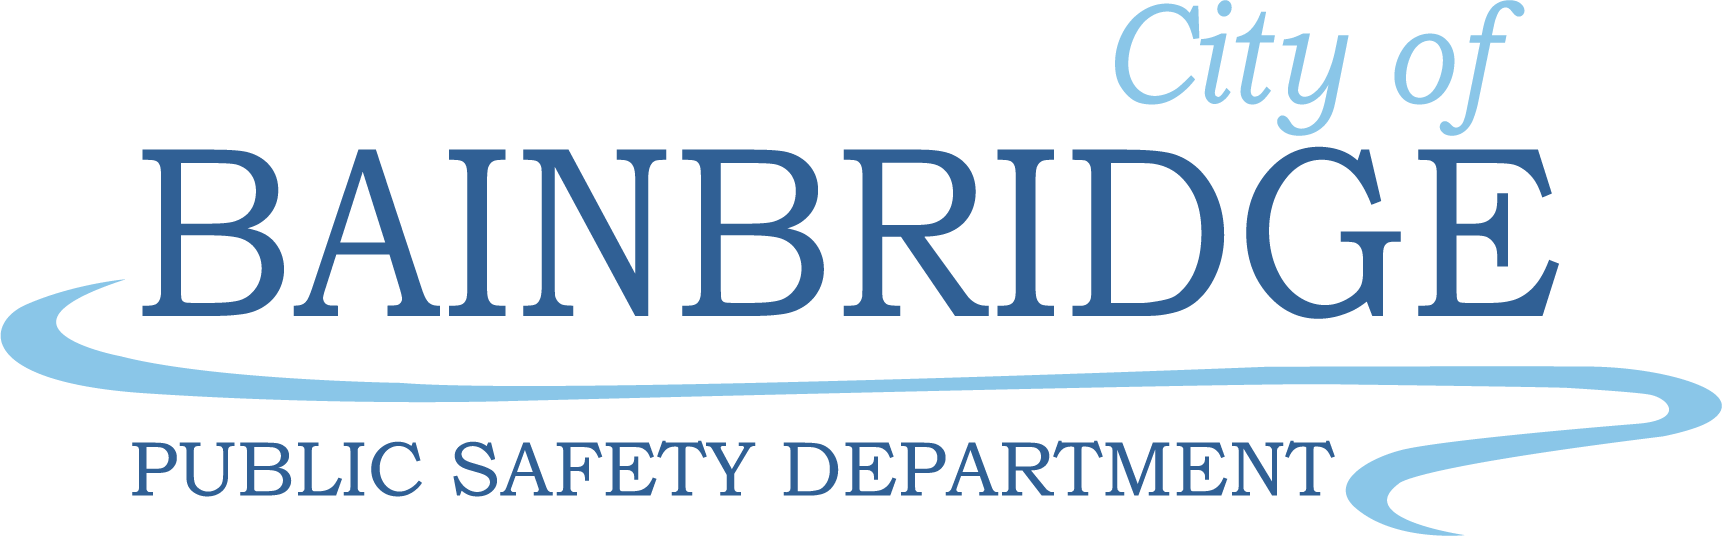 Bainbridge Public Safety Department, GA Police Jobs